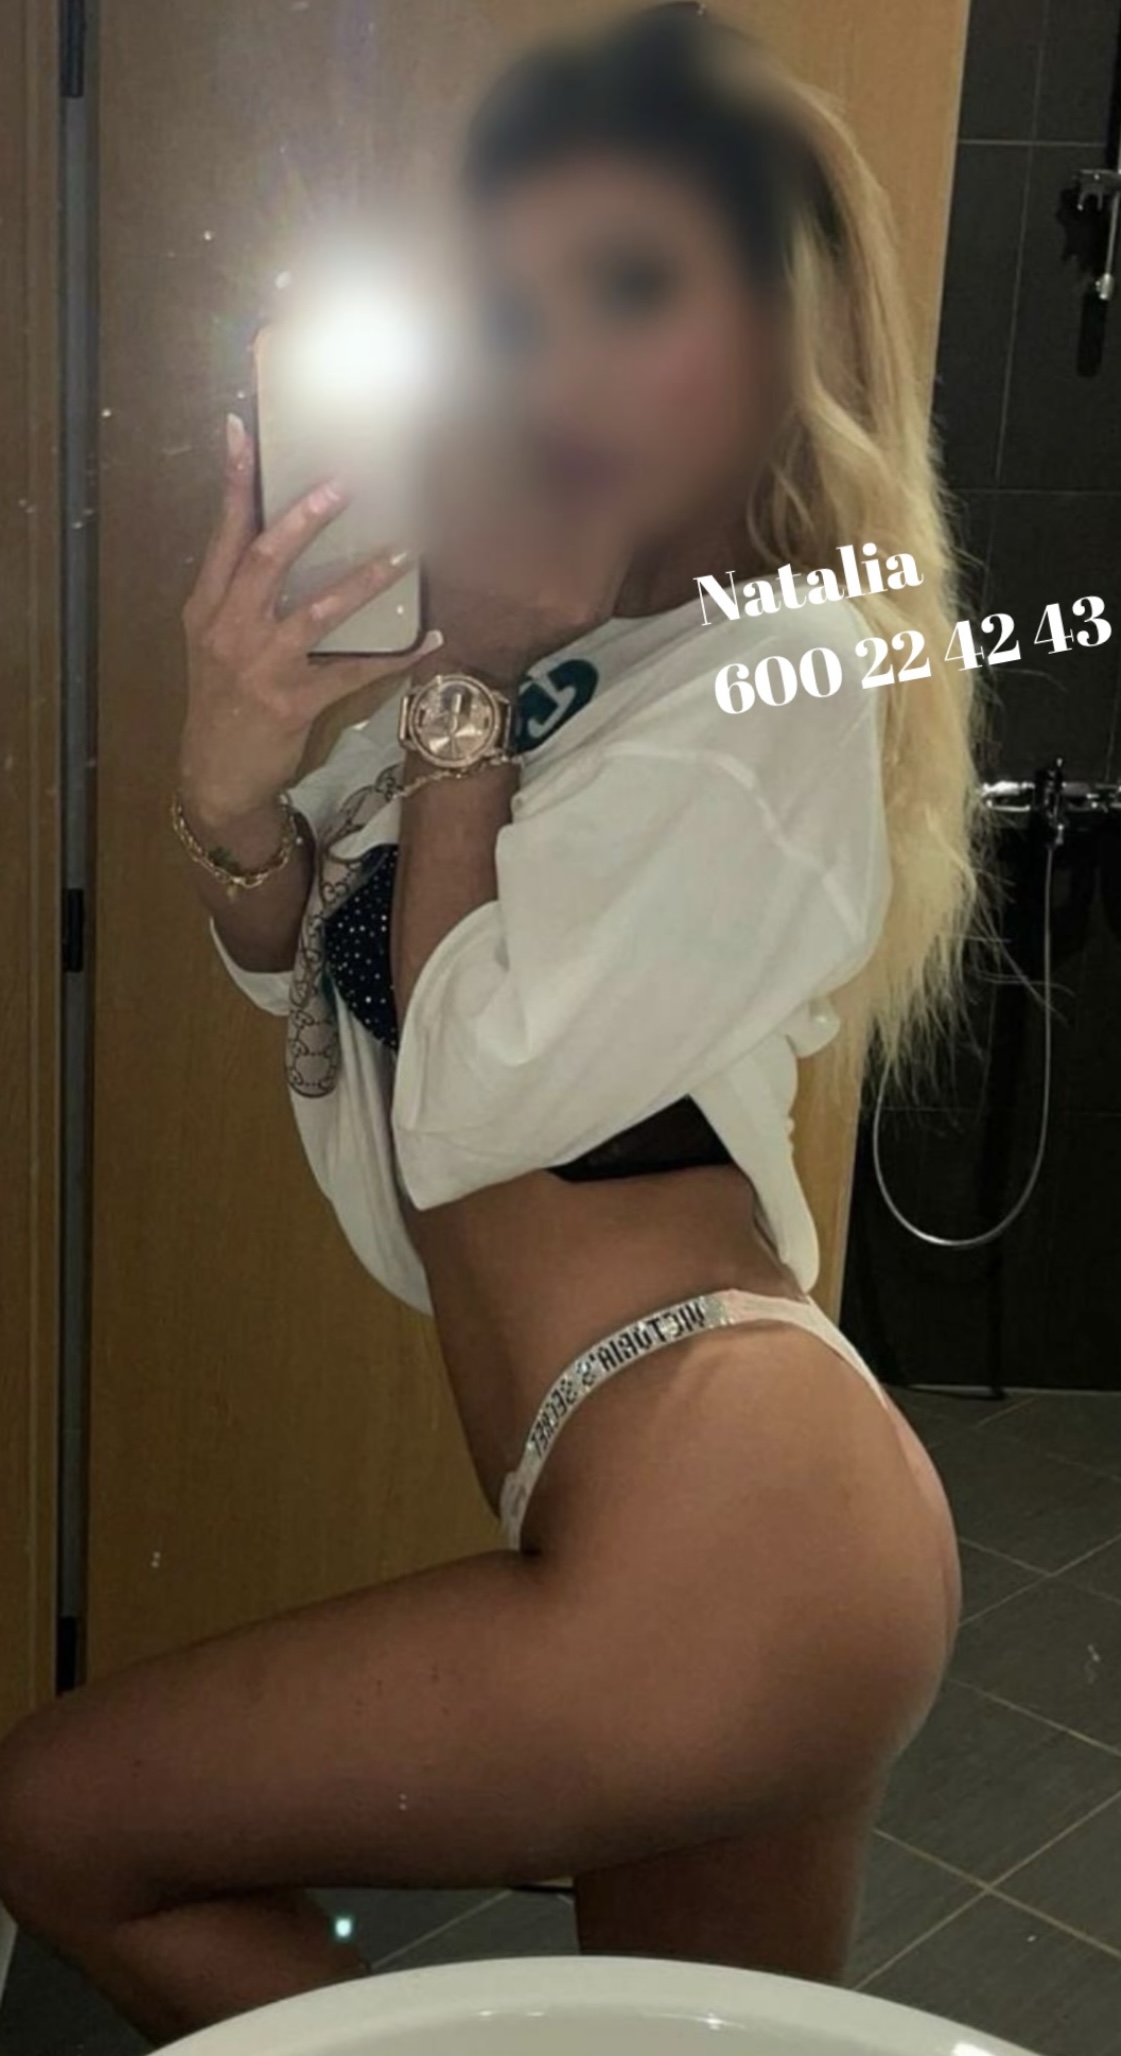 NATY SEXY RUBIA!! 600224243